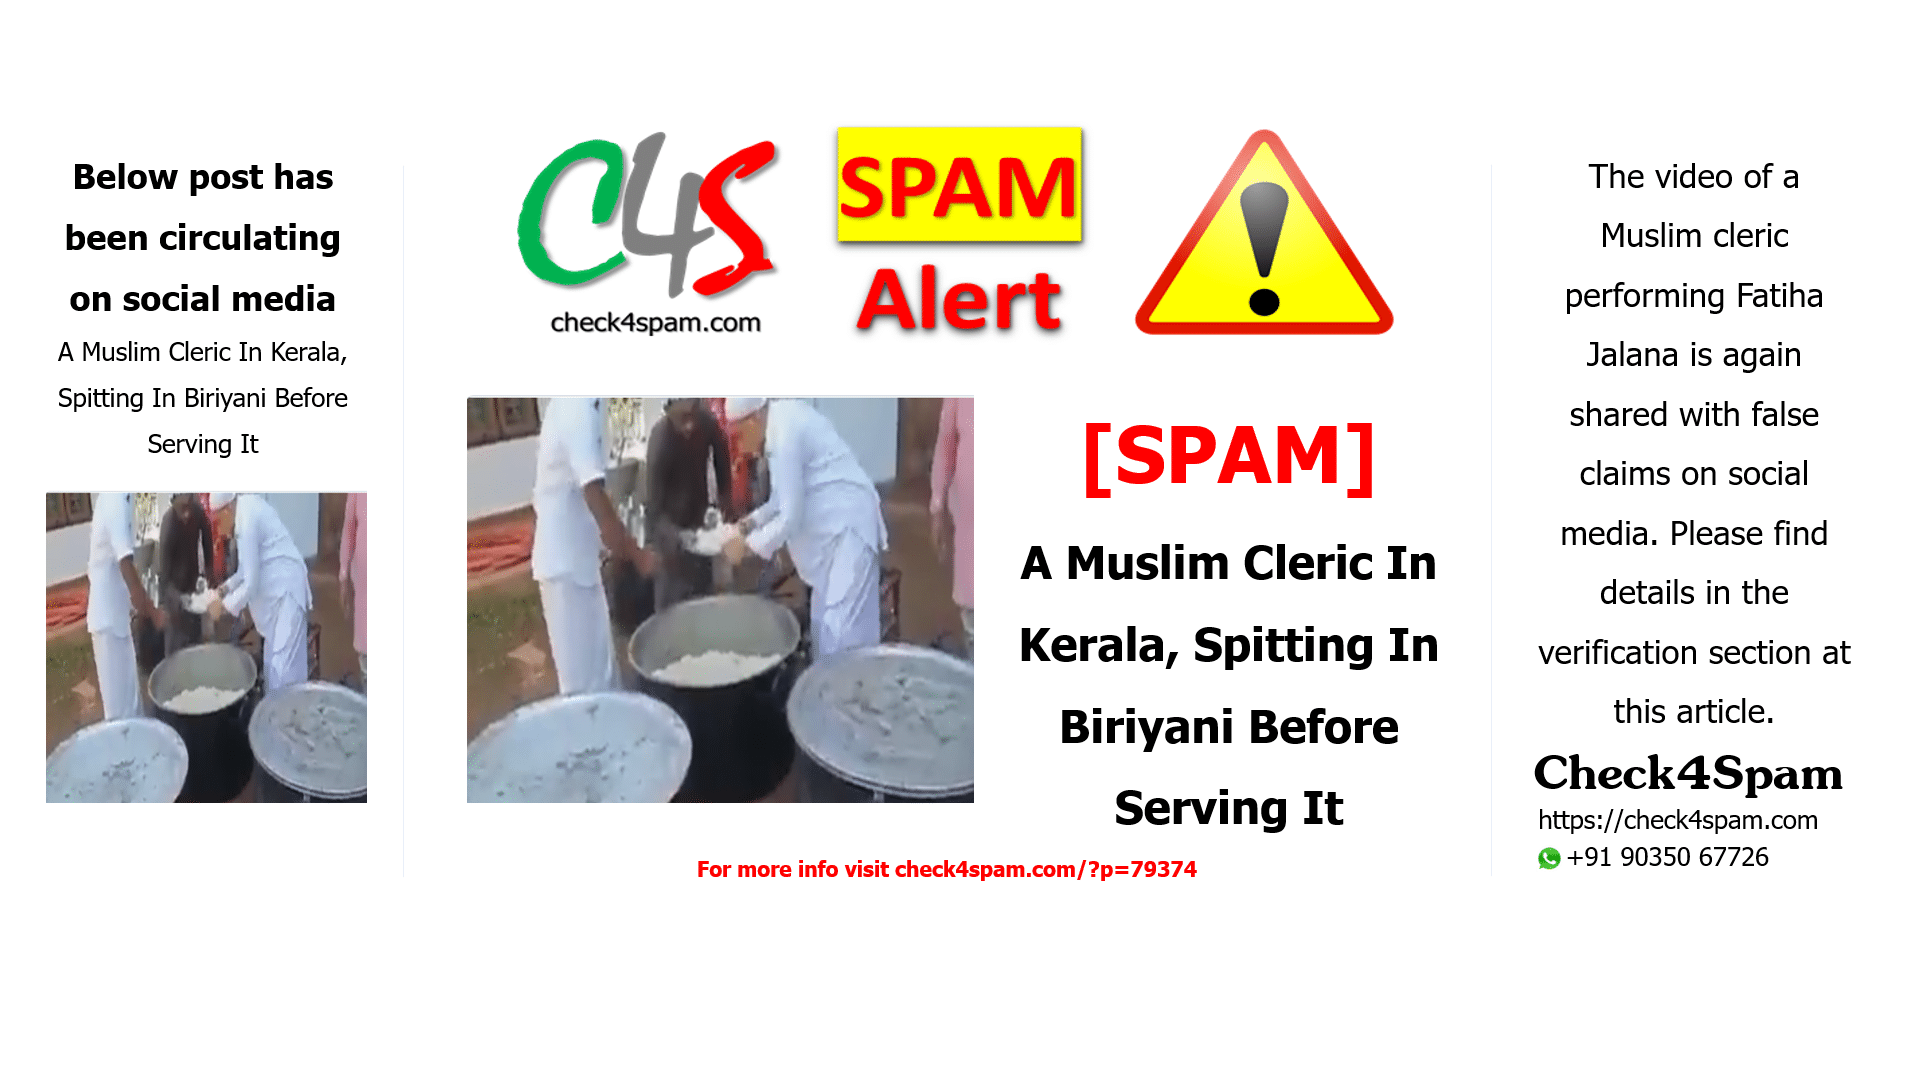 A Muslim Cleric In Kerala, Spitting In Biriyani Before Serving It